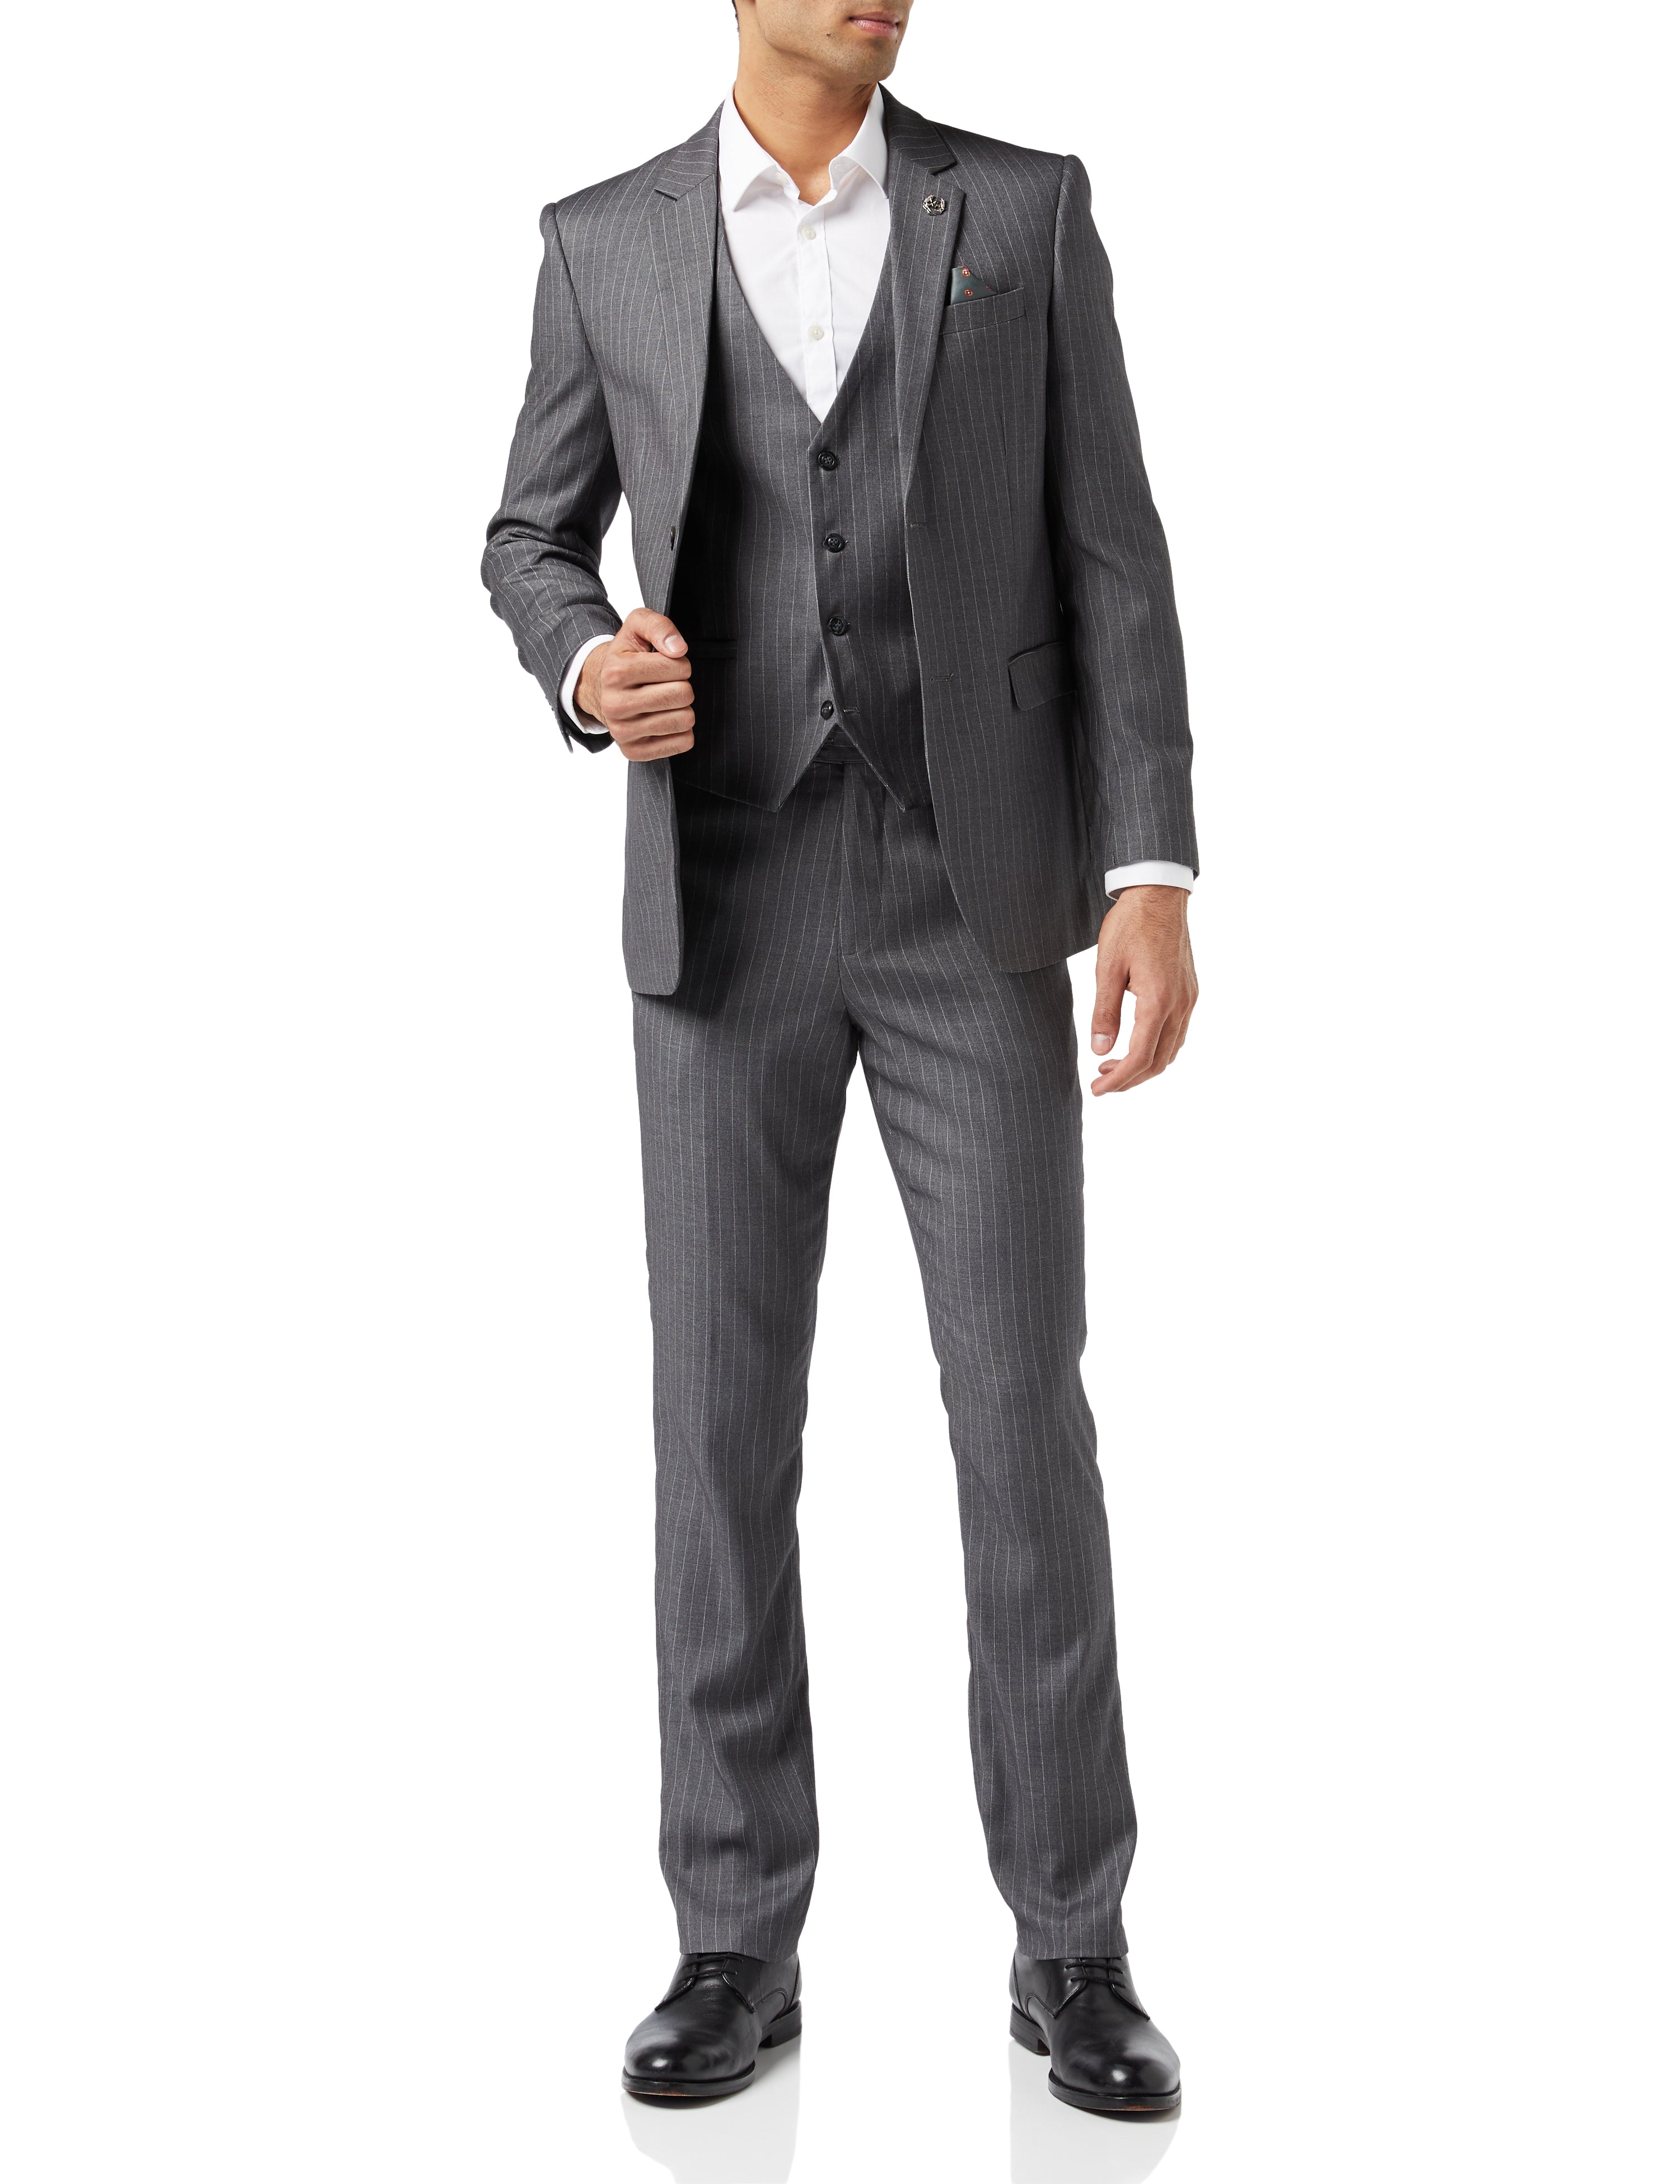 3 Piece Pin Stripe Grey Suit